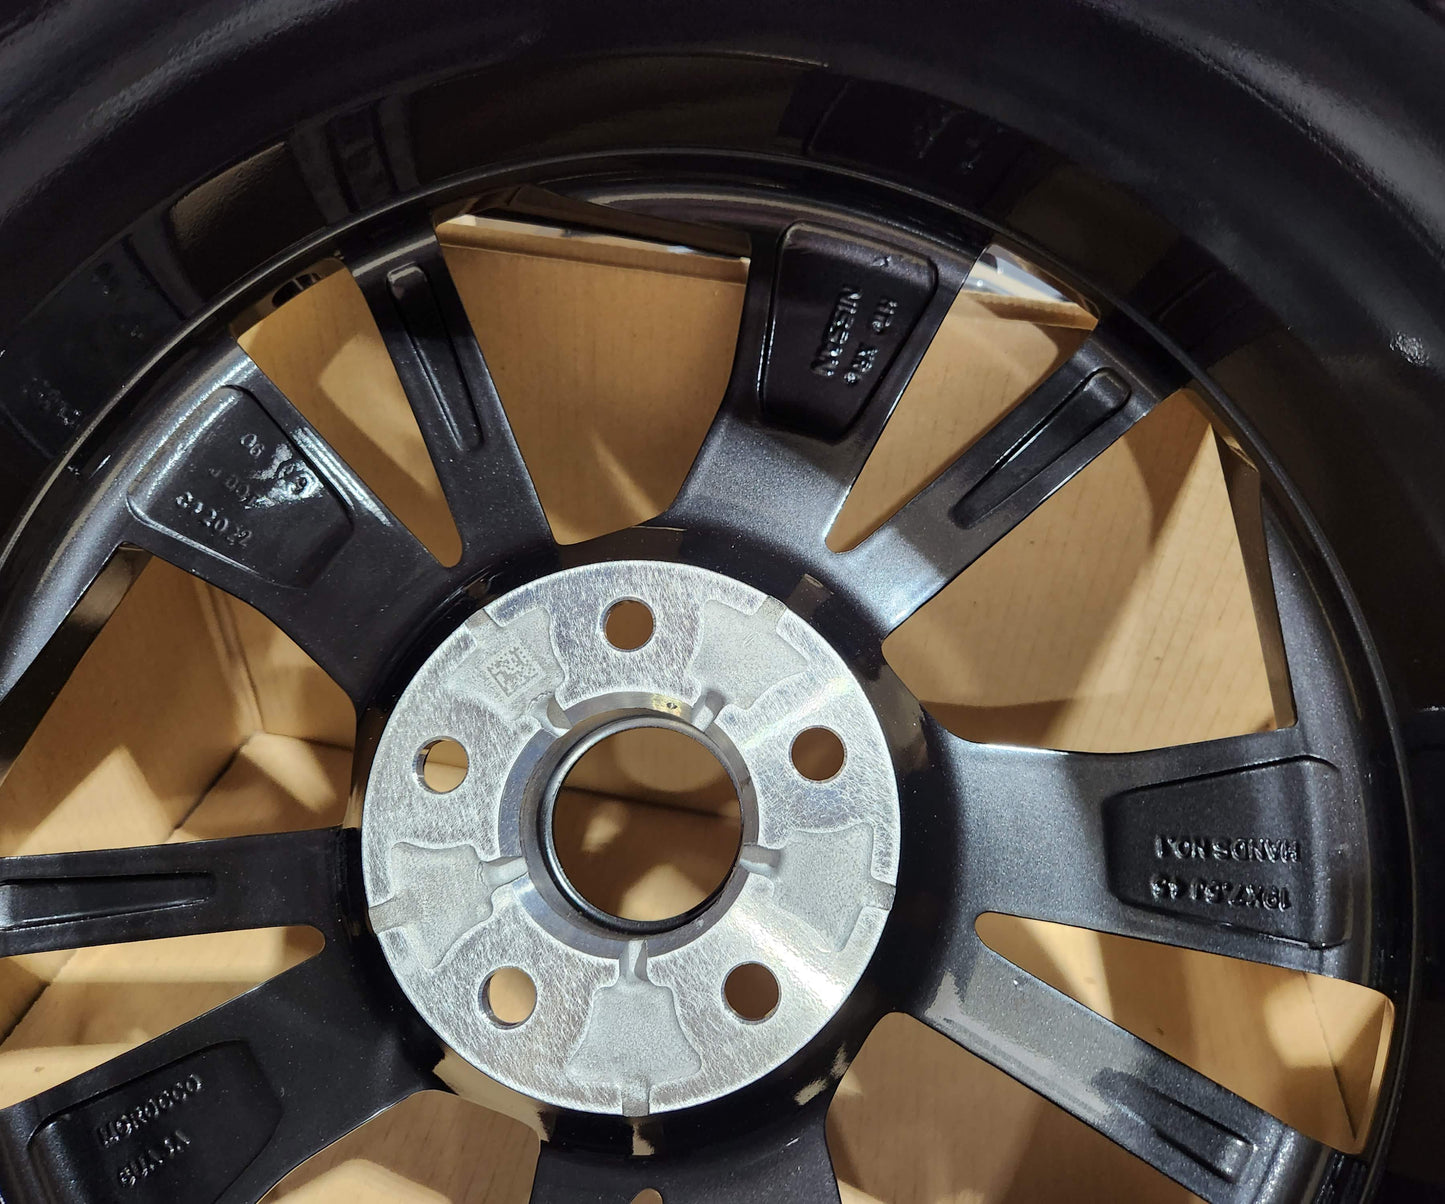 Nissan Qashqai Juke 19" Alloy Wheels Diamond Cut Set of 4 D03006UA4J